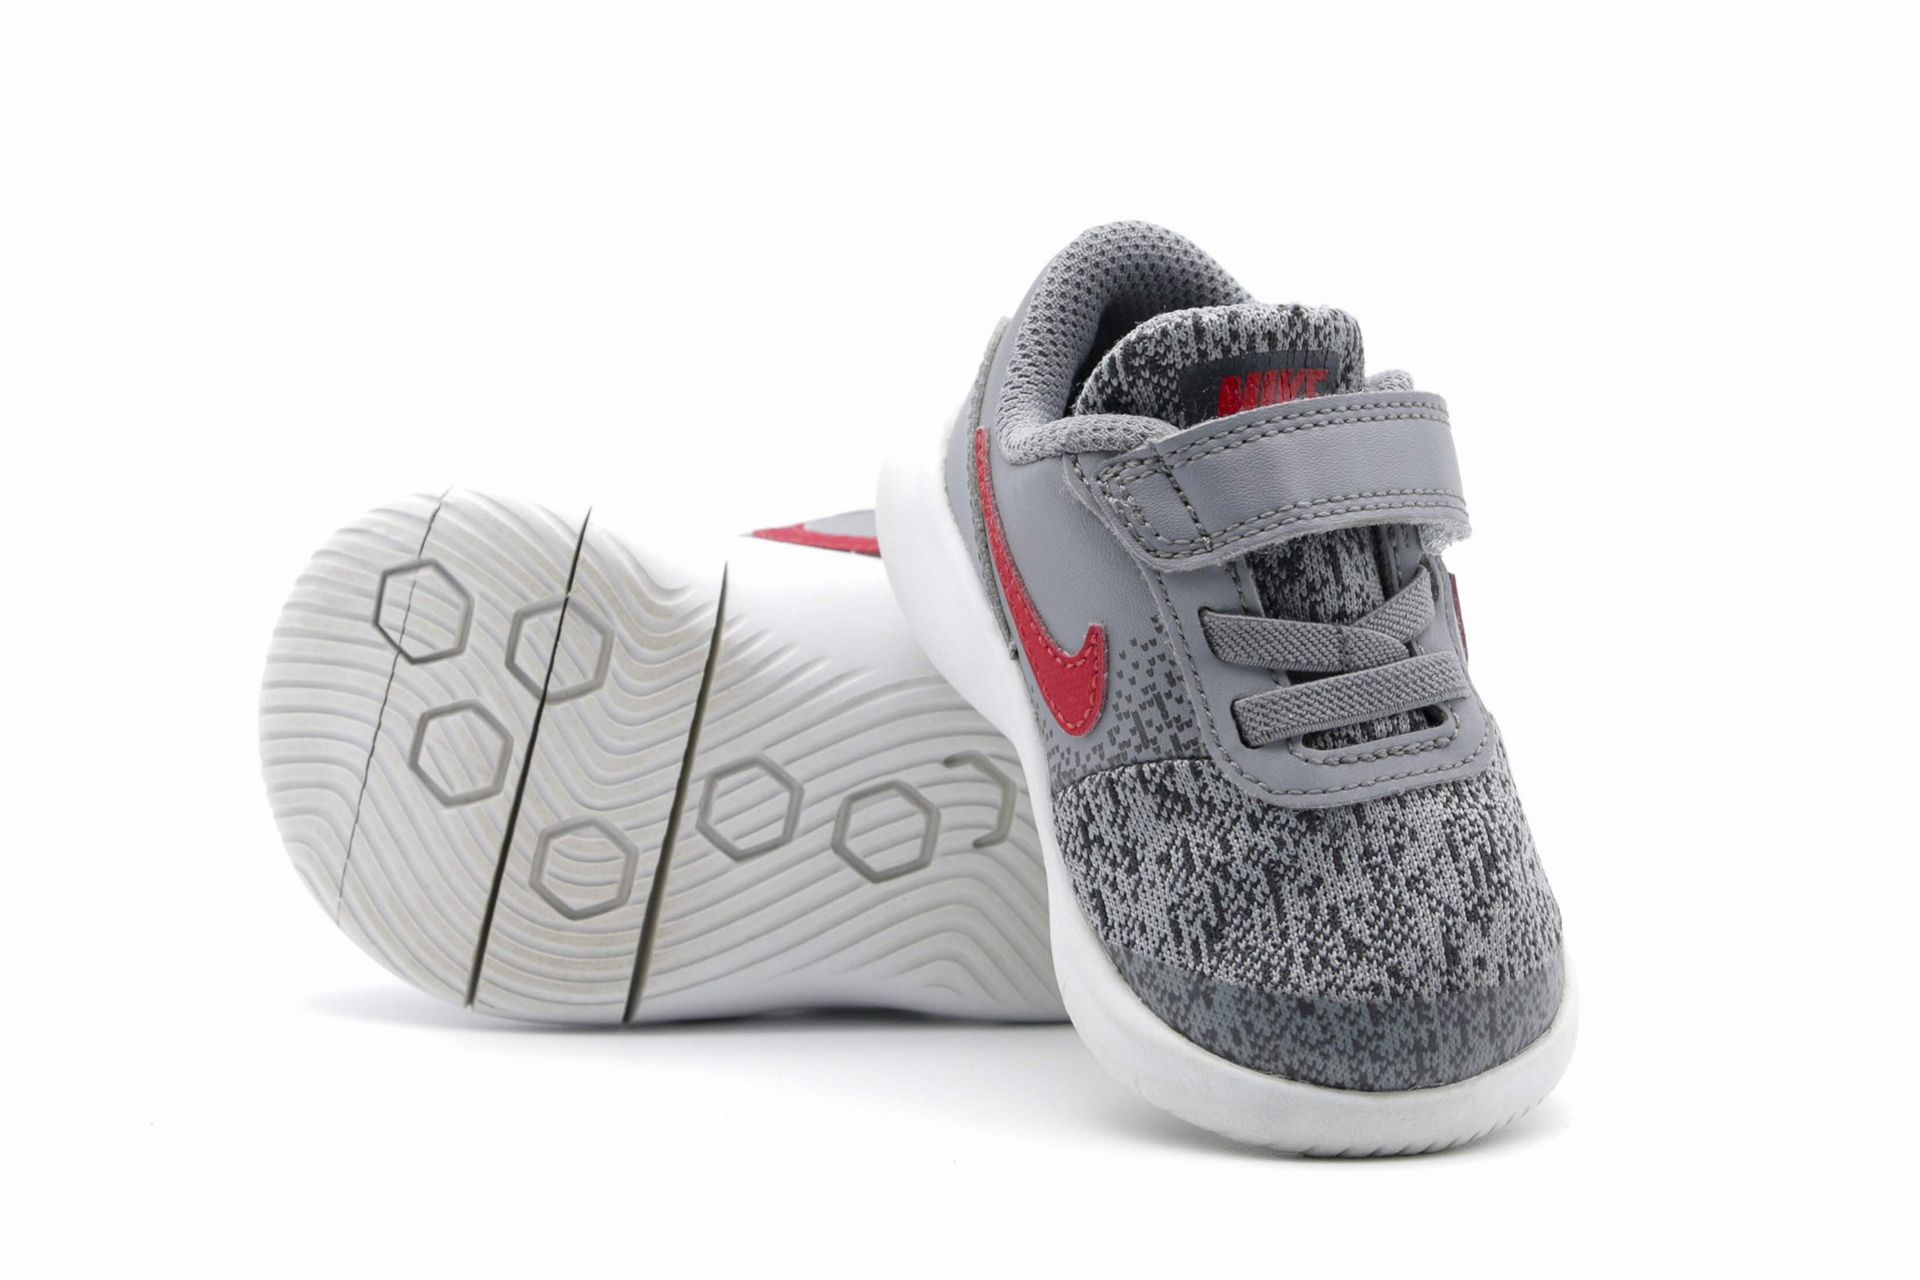 Nike Flex Contact Running Shoe - Grey/Crimson Baby Boy Sneakers - Size 4C